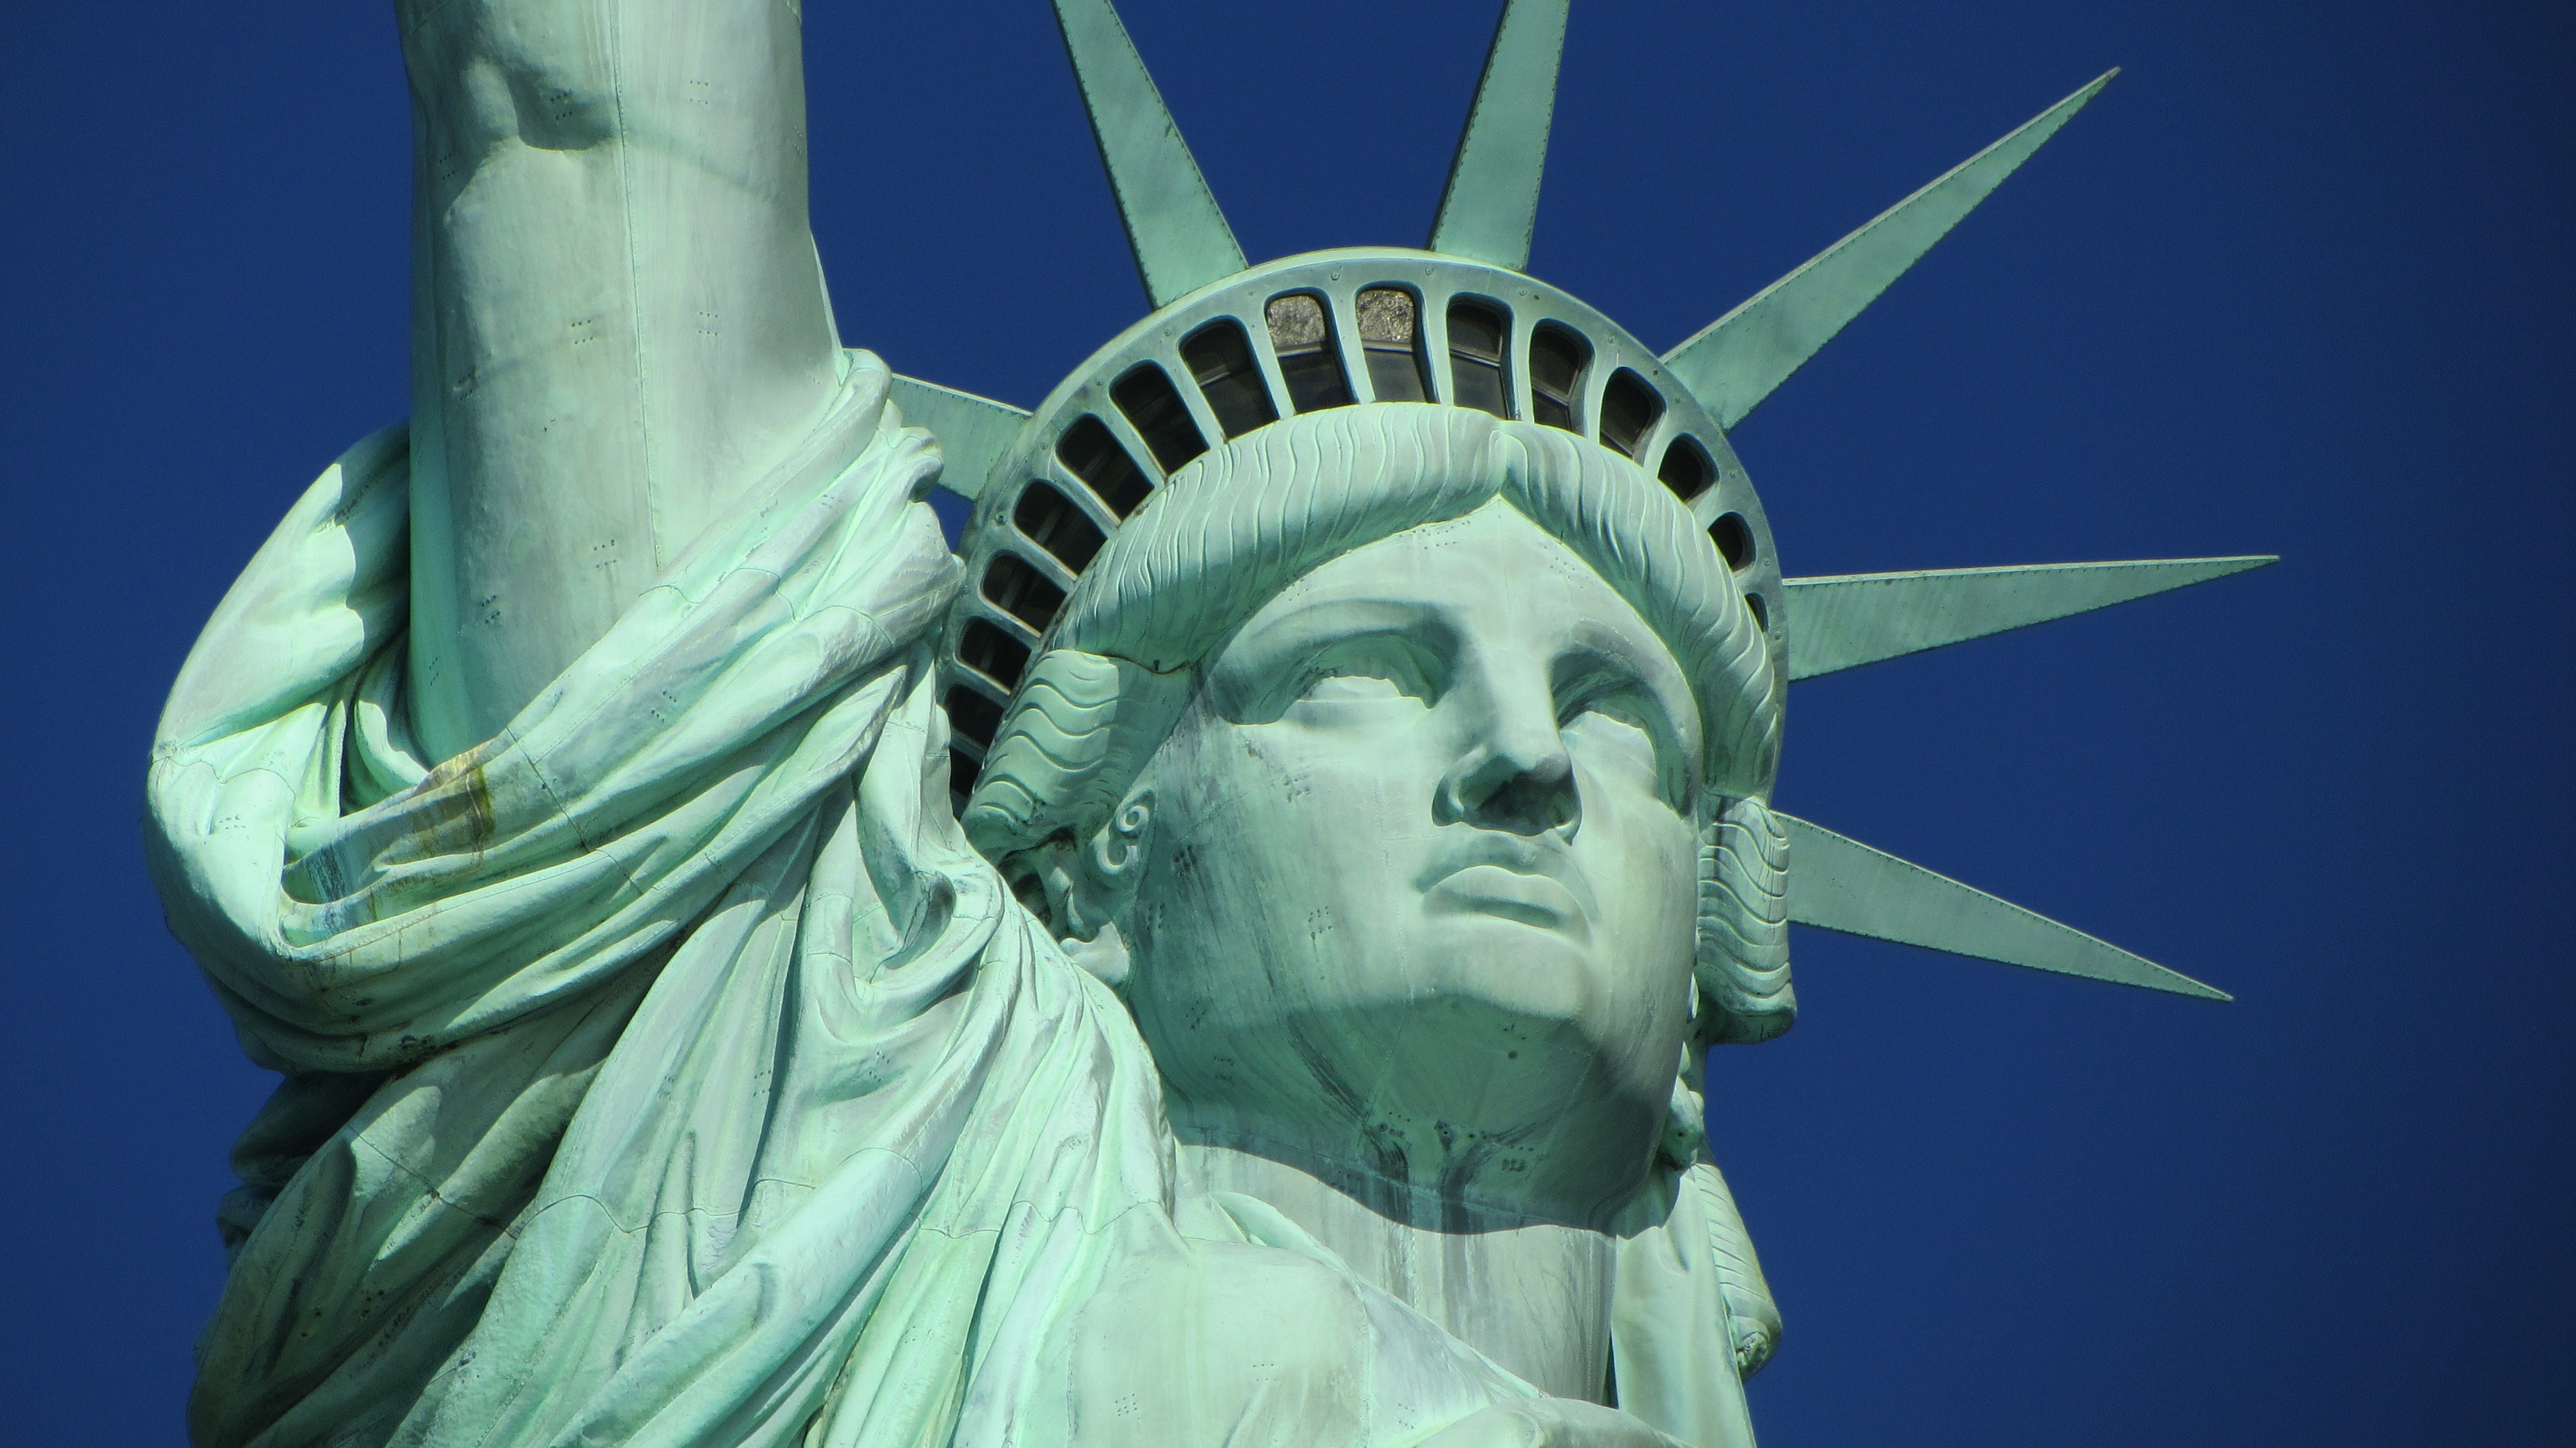 statue-of-liberty-new-york-ny-nyc-60003.jpeg